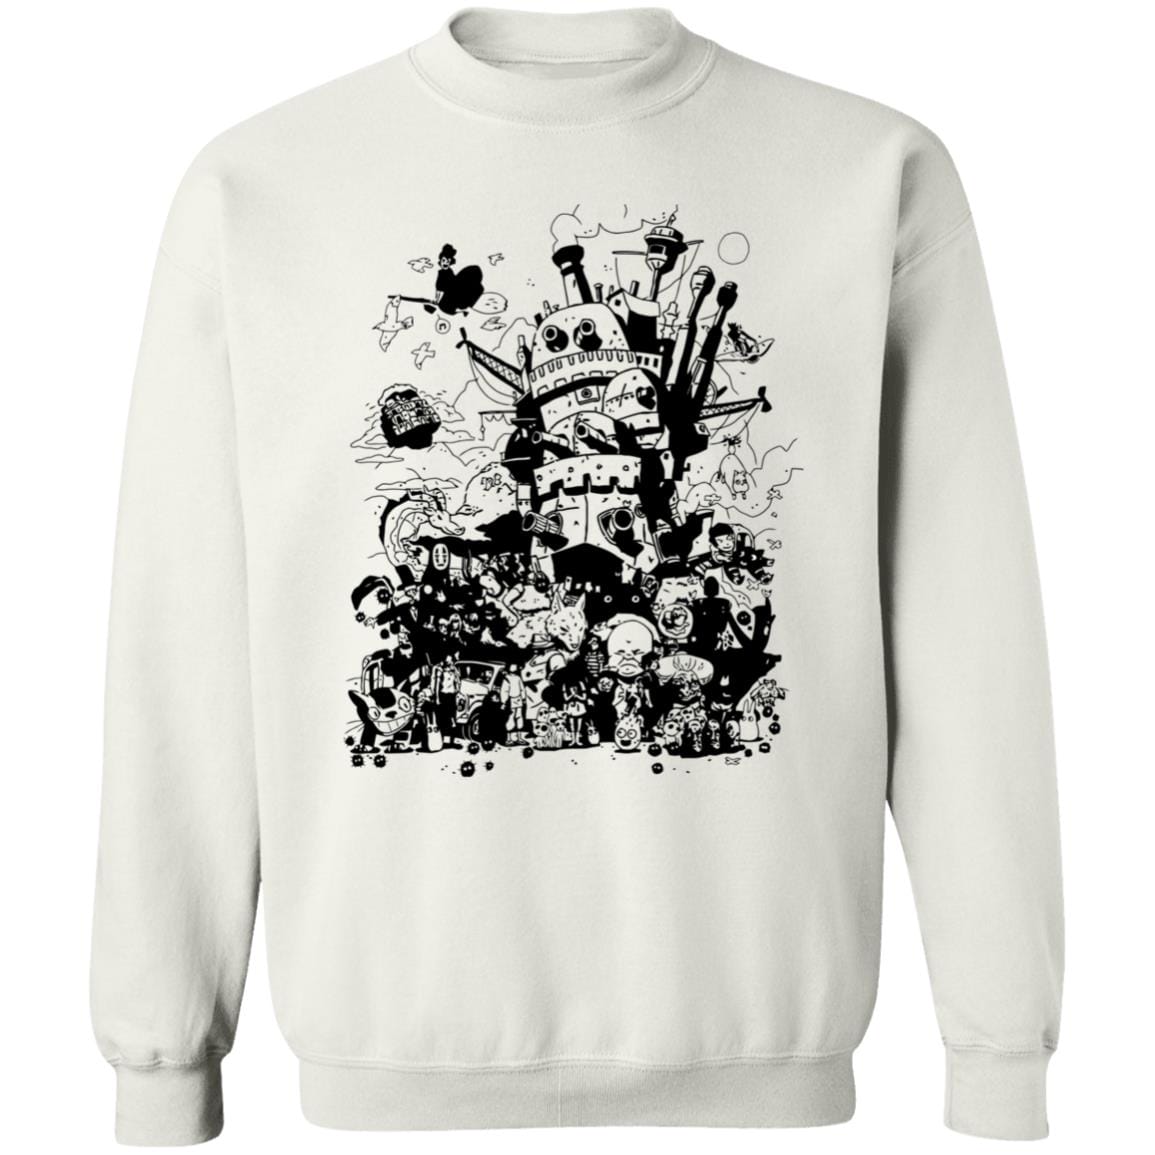 Studio Ghibli Art Collection Black and White Sweatshirt